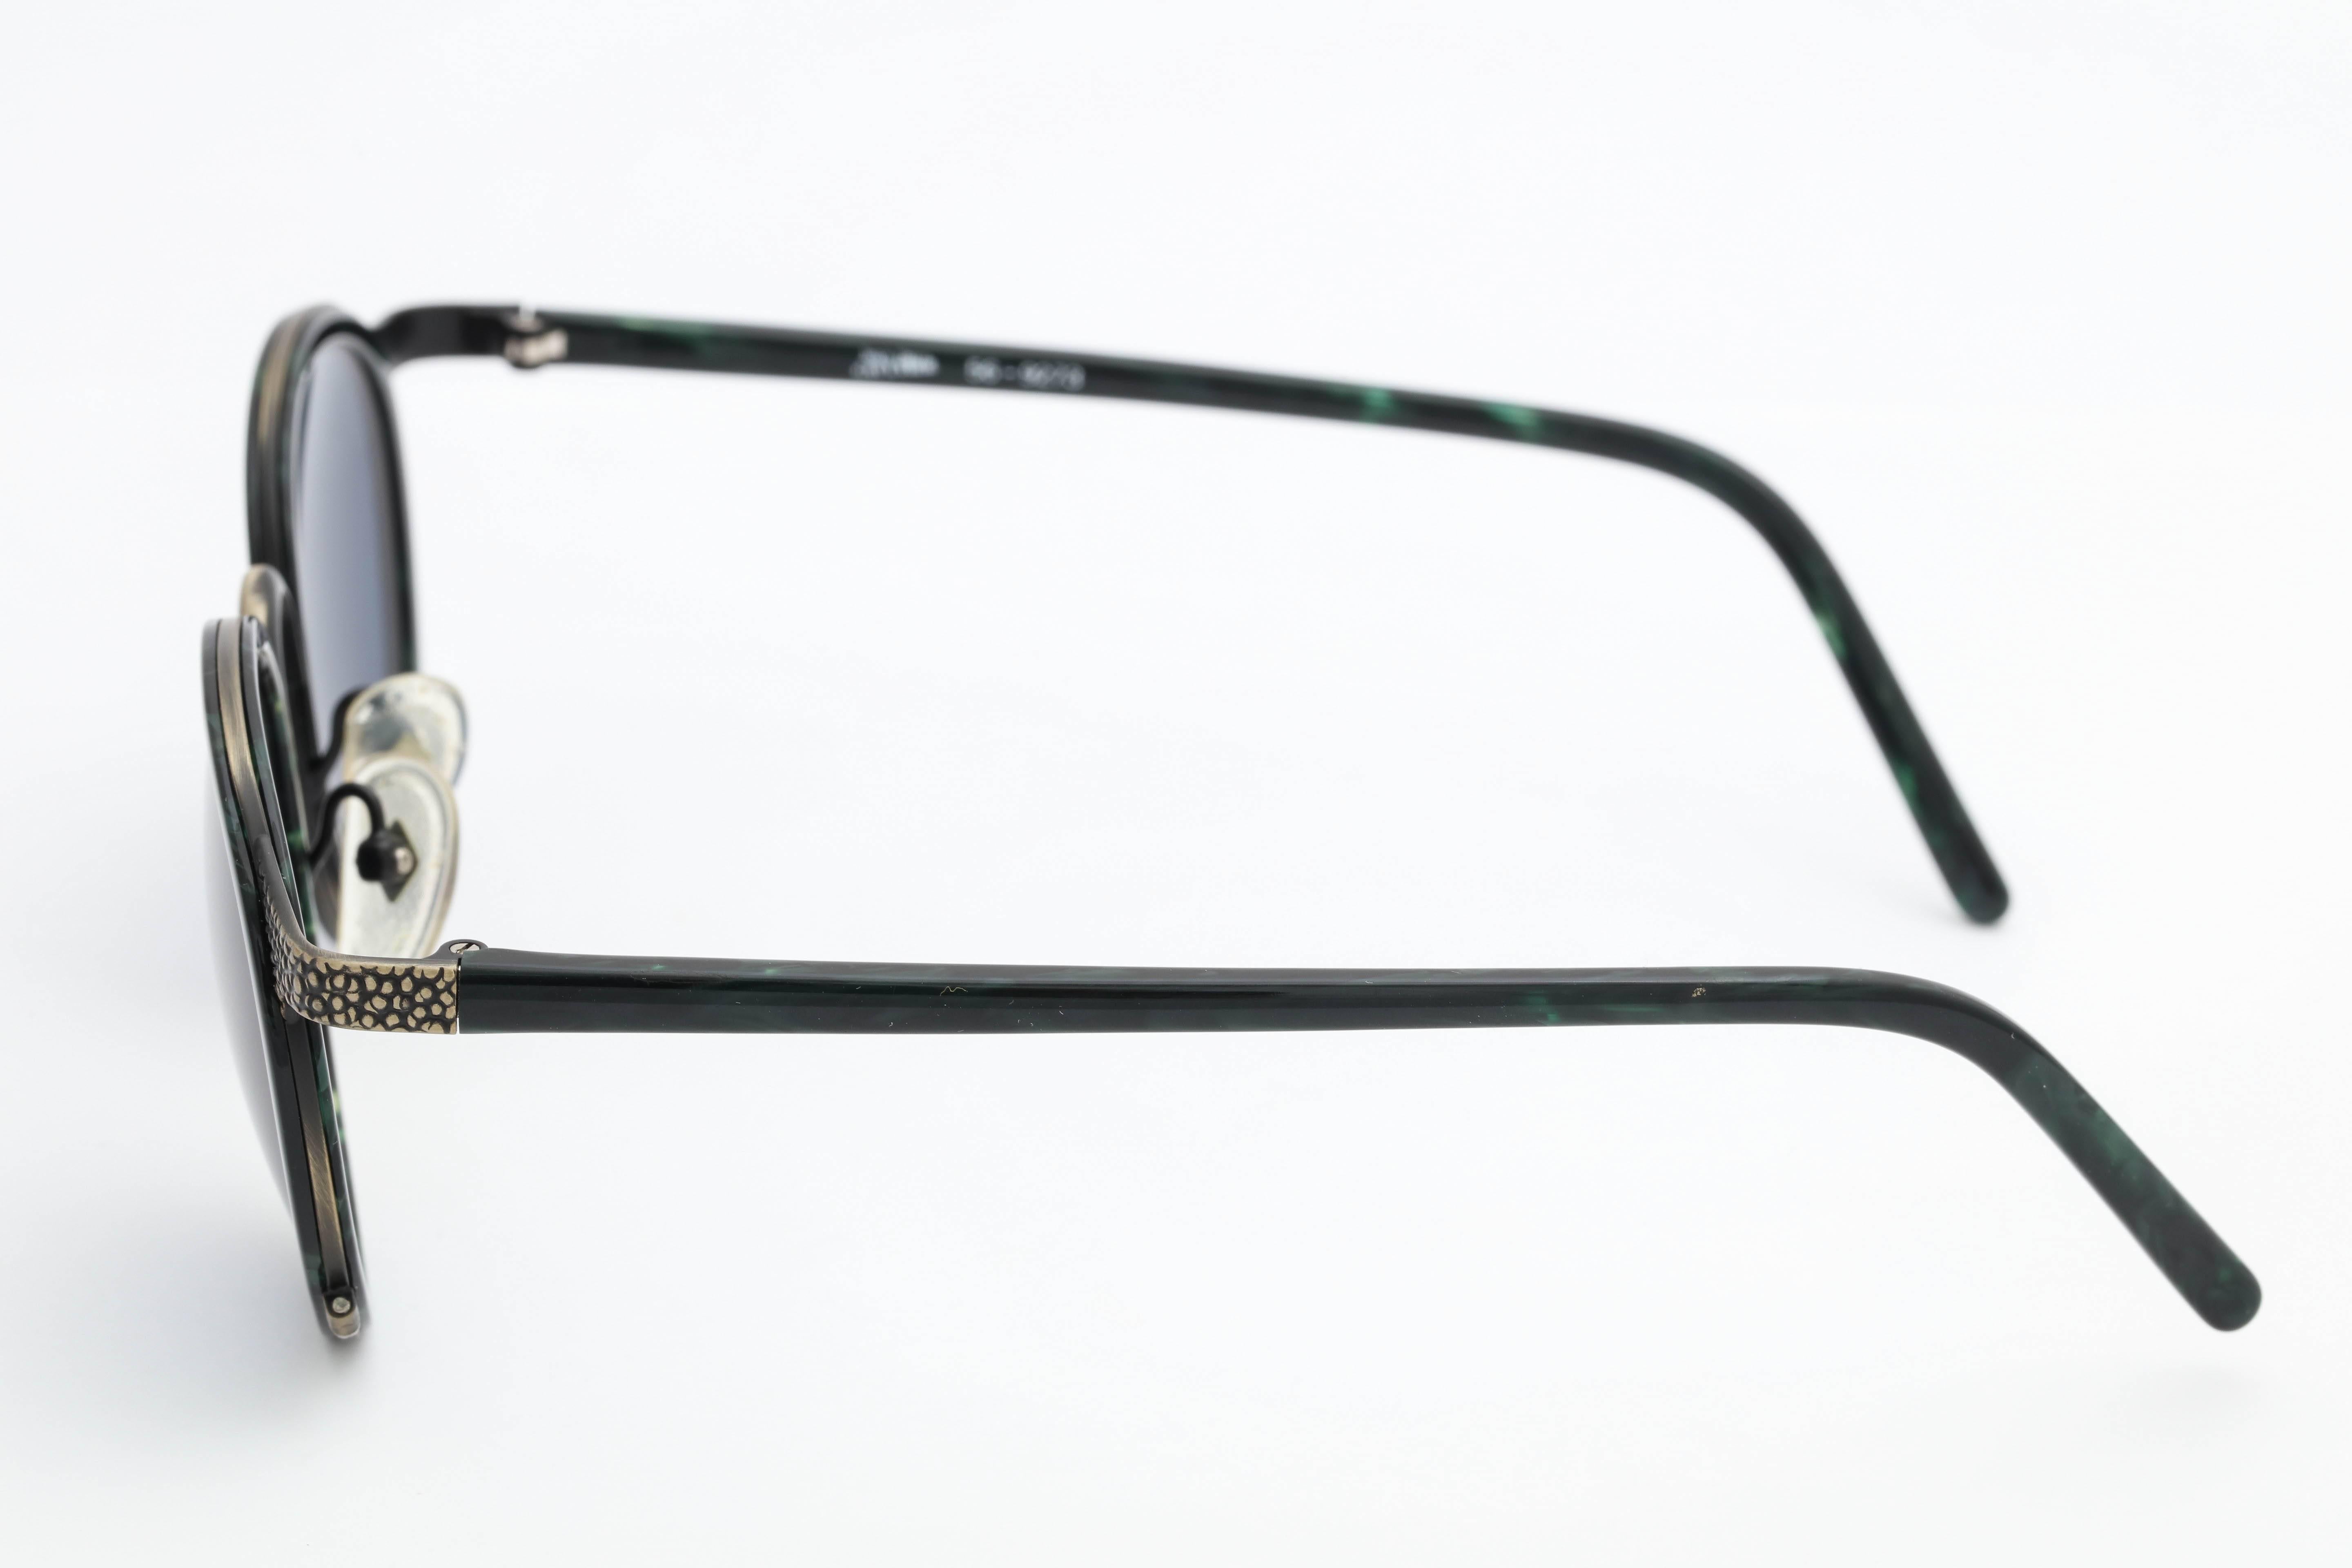 Green/Black Vintage Jean Paul Gaultier Sunglasses

Frame Width: 150mm 
Lens Width: 51mm 
Frame Height: 54mm 
Arm Length: 124mm